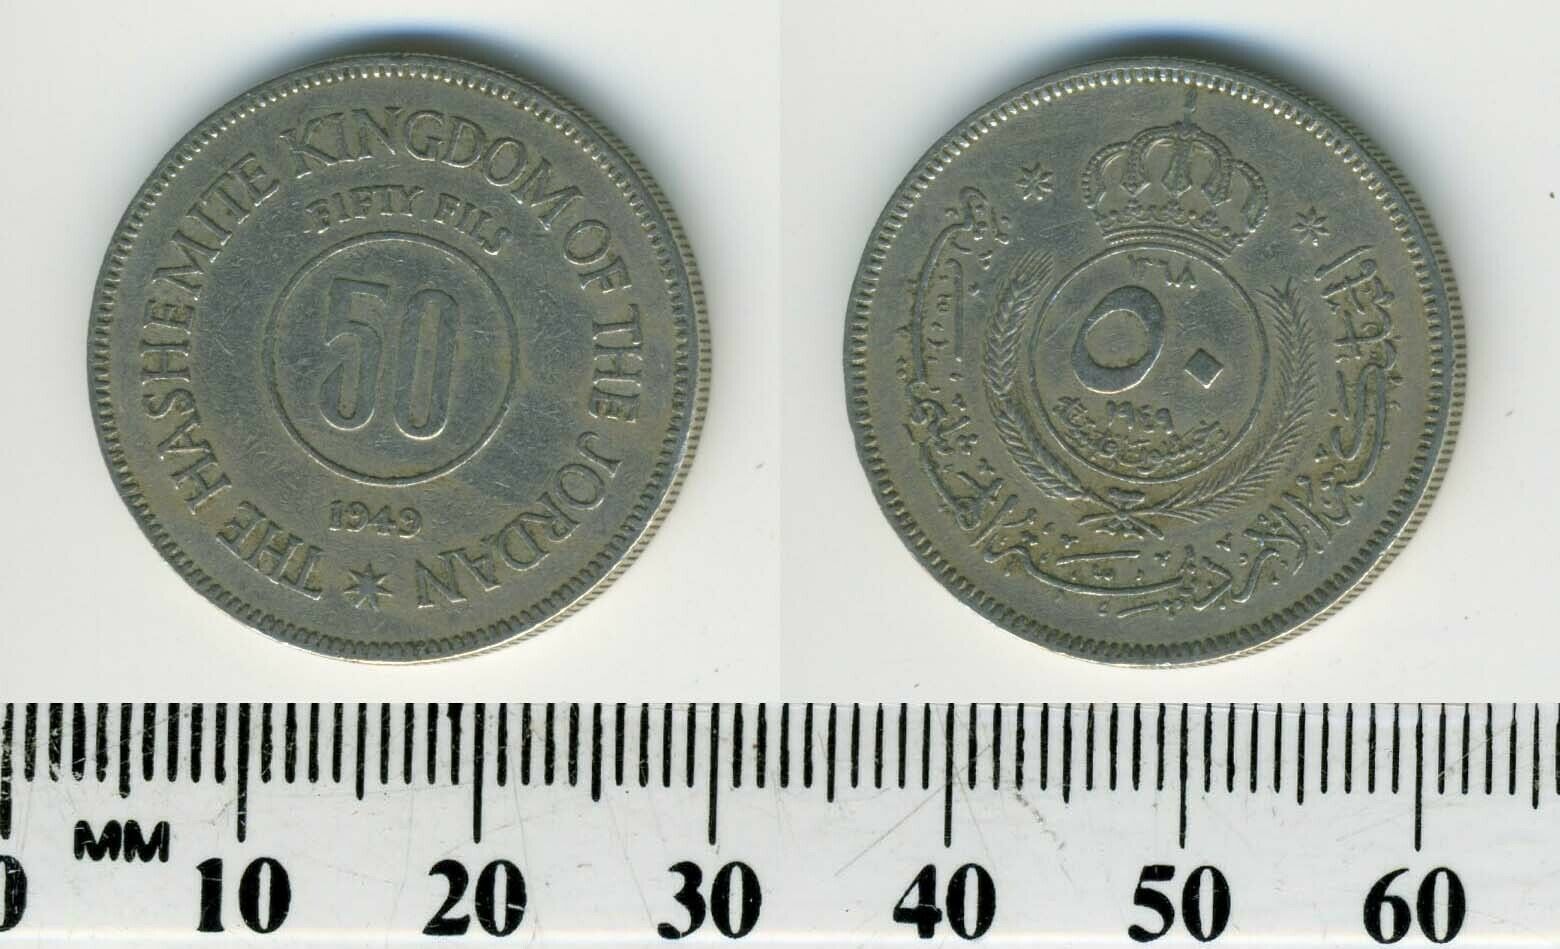 Jordan 1949 (1368) - 50 Fils Copper-nickel Coin - Abdullah Ibn Al-hussein